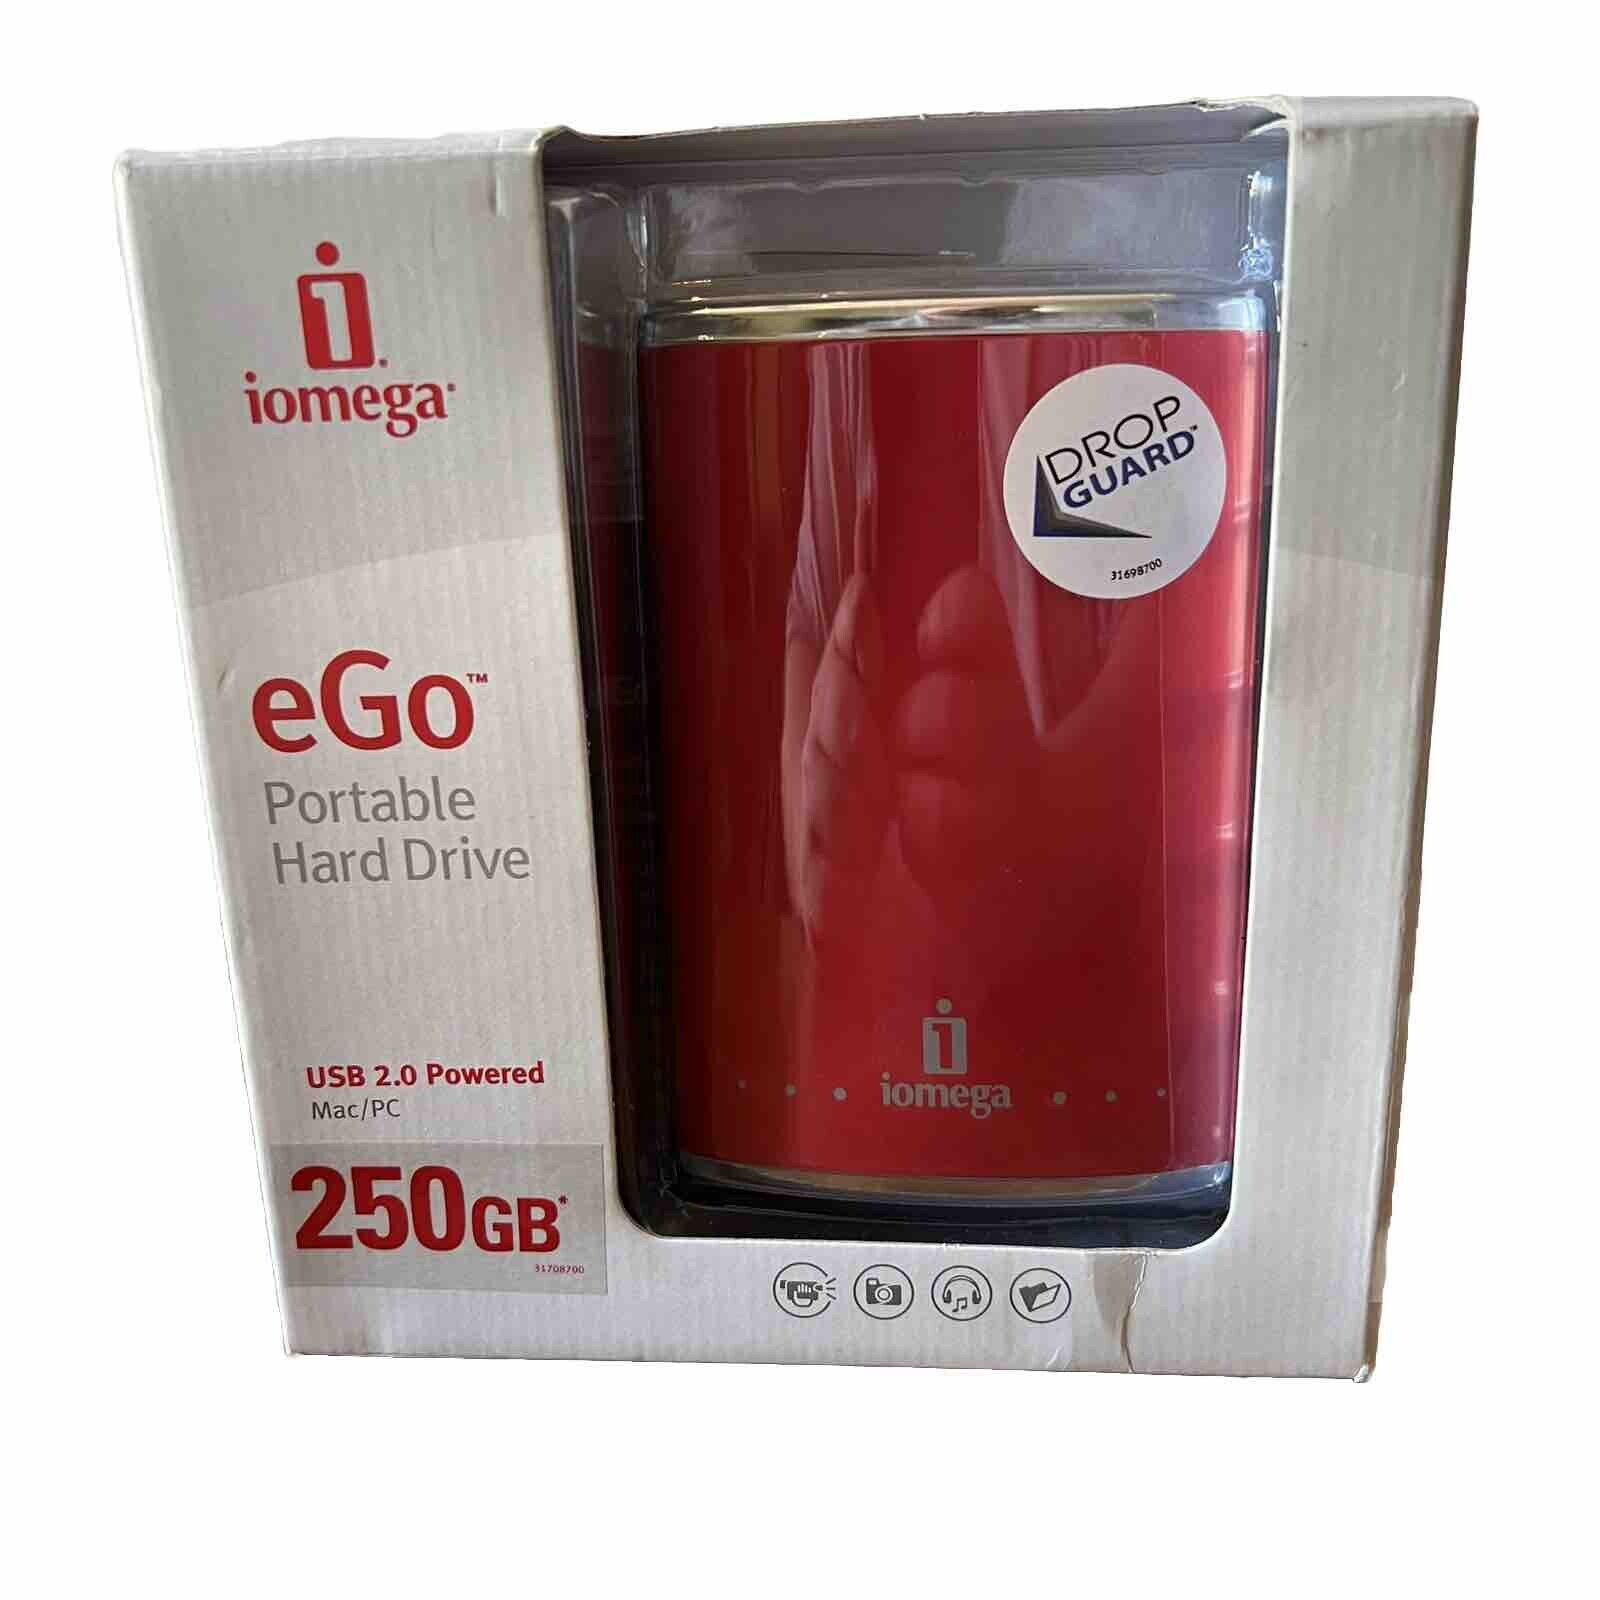 Iomega Ego Red Portable Hard Drive USB 2.0 250gb Open Box For Windows Xp Vista